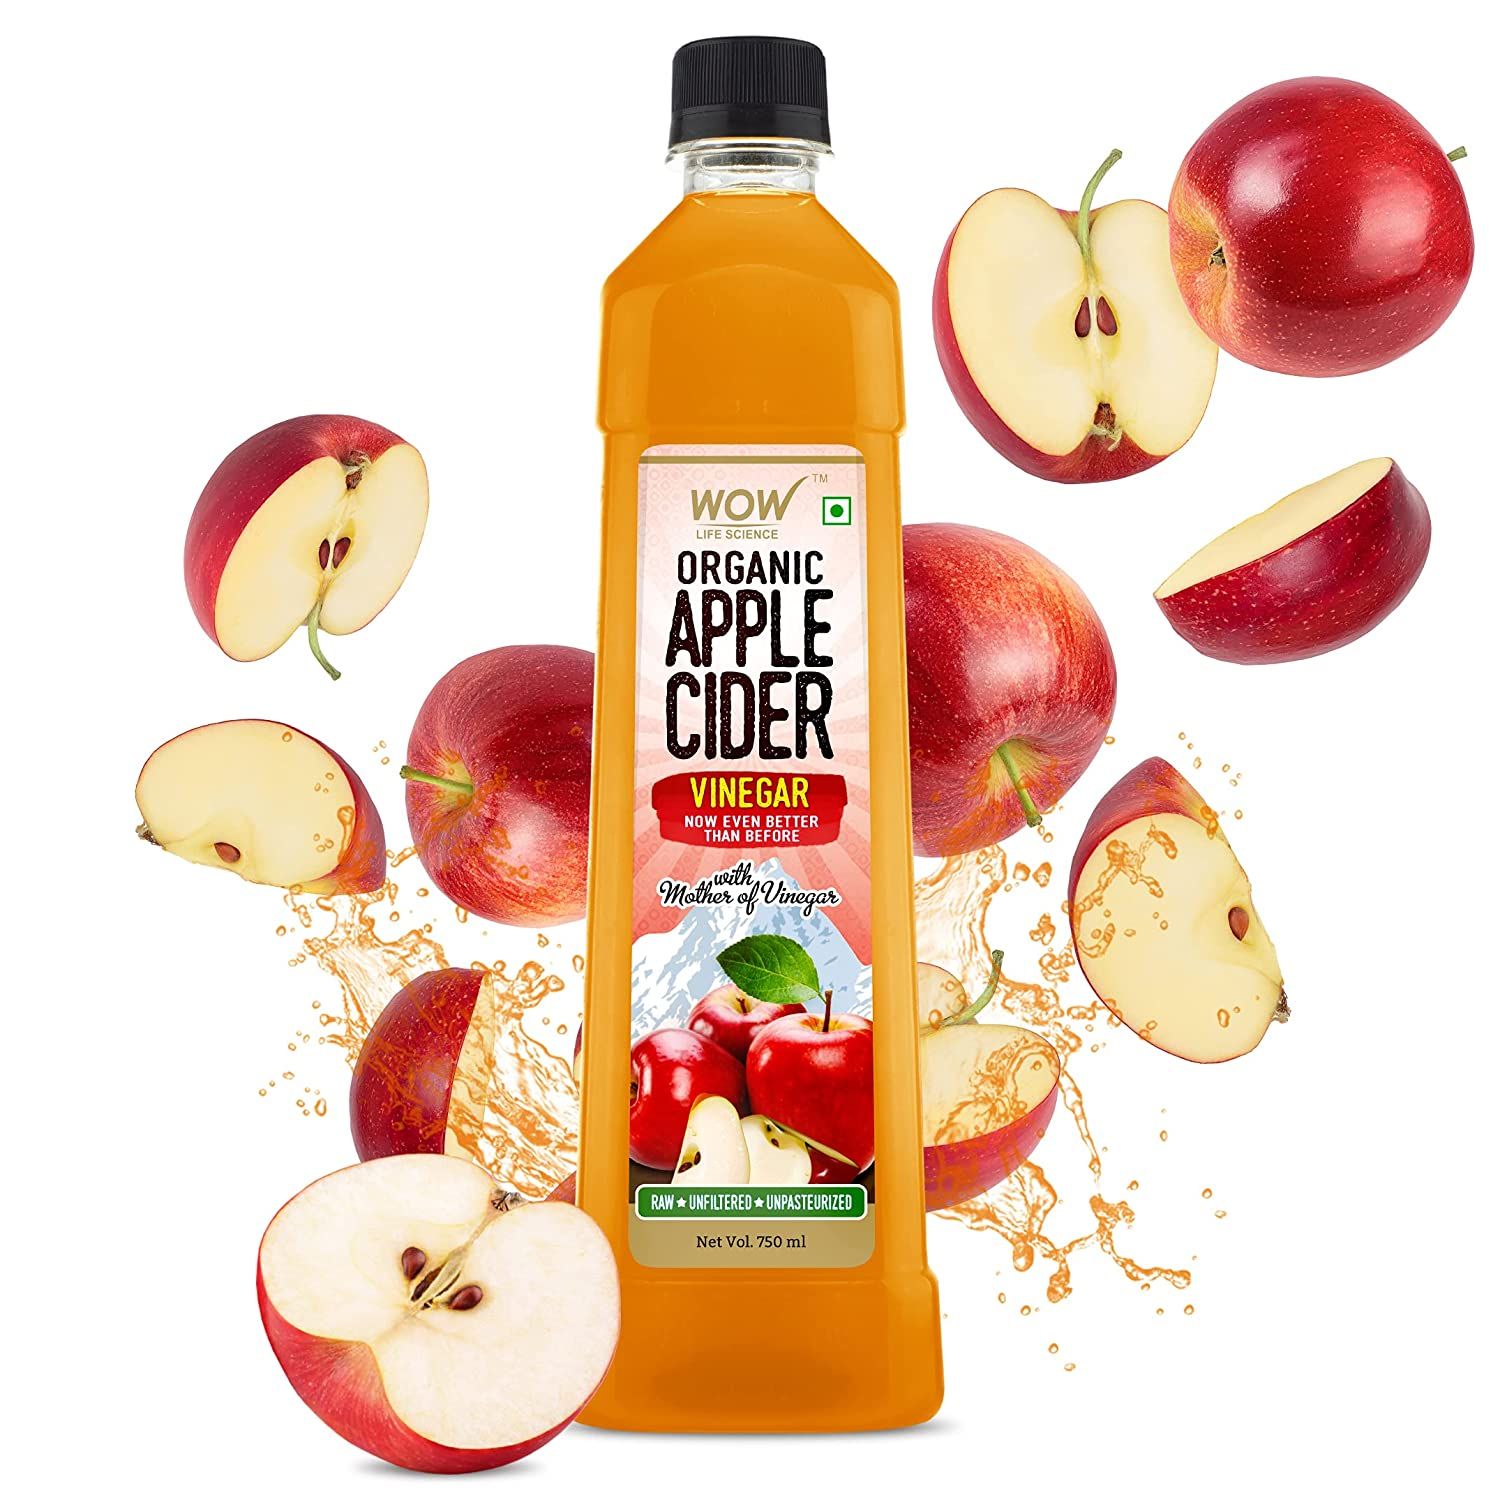 Wow Organic Apple Cider Vinegar Image